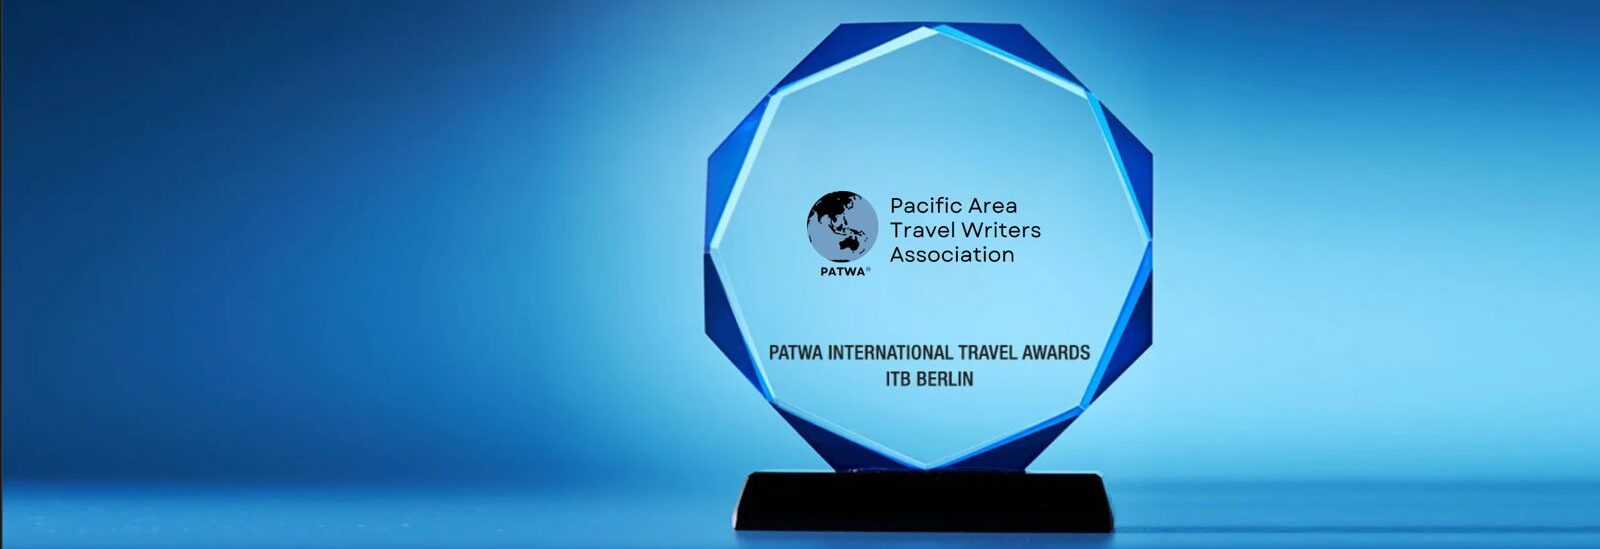 international tourism awards